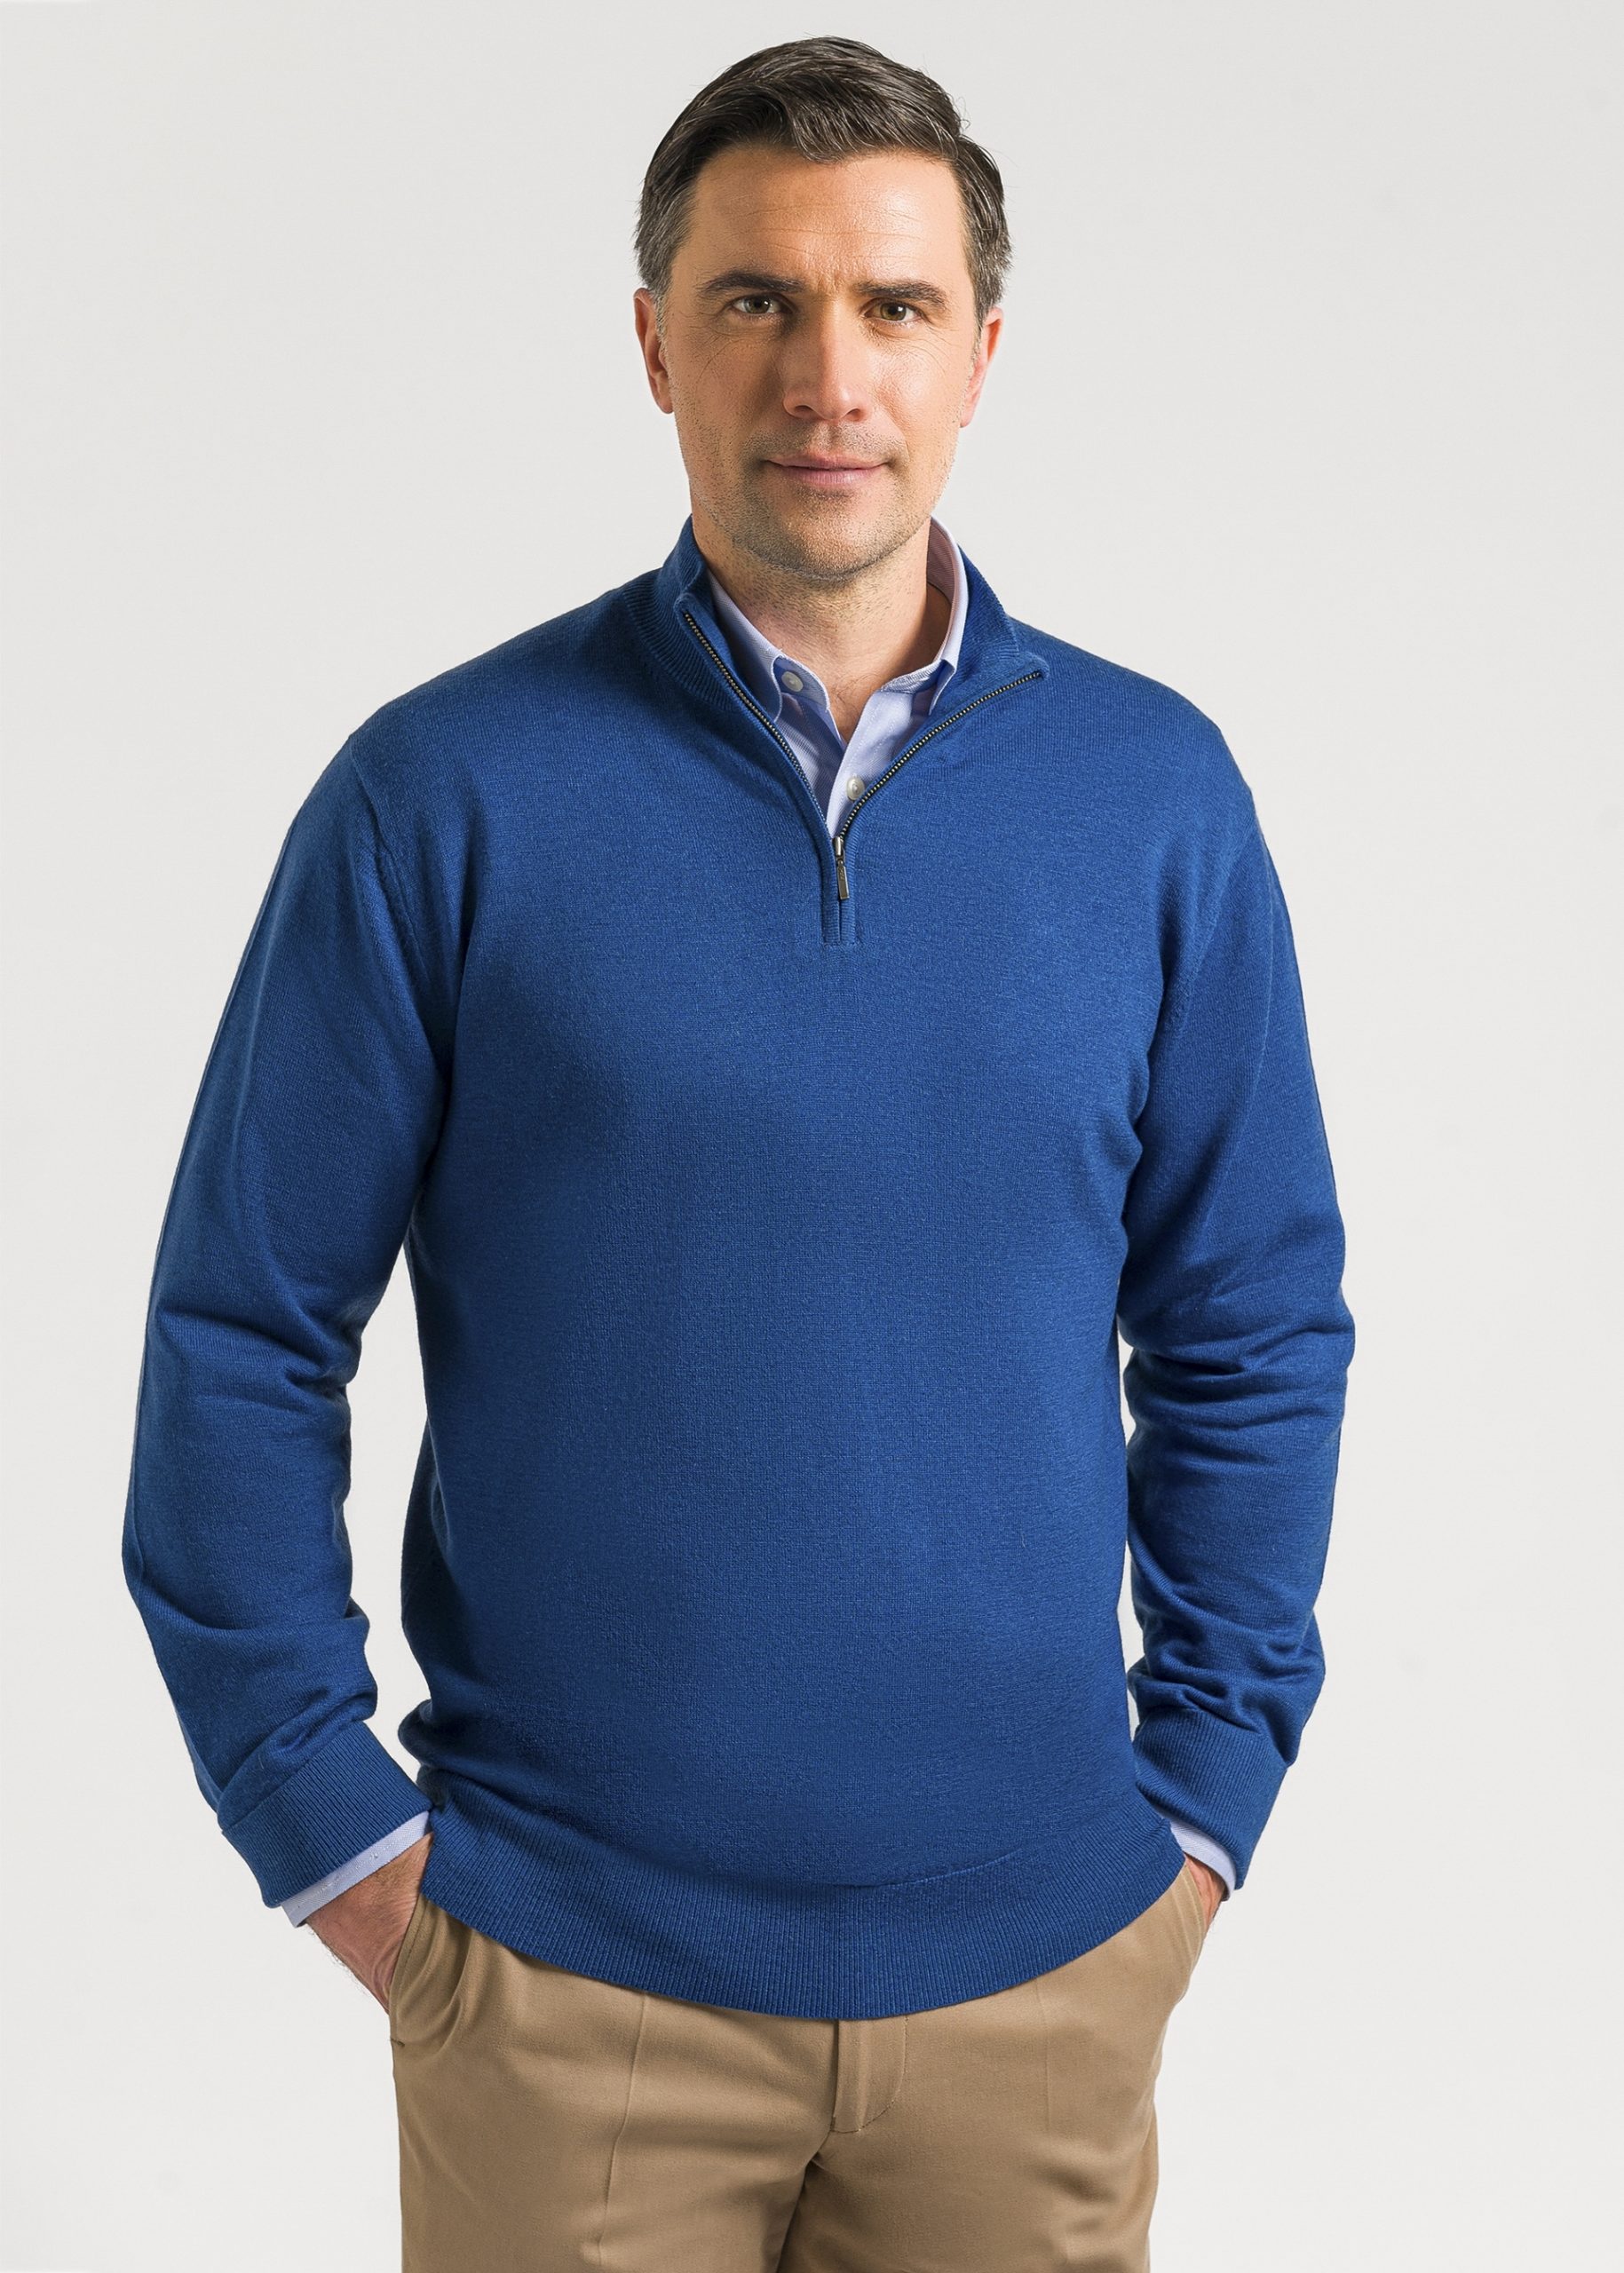 Roderick Charles blue sweater